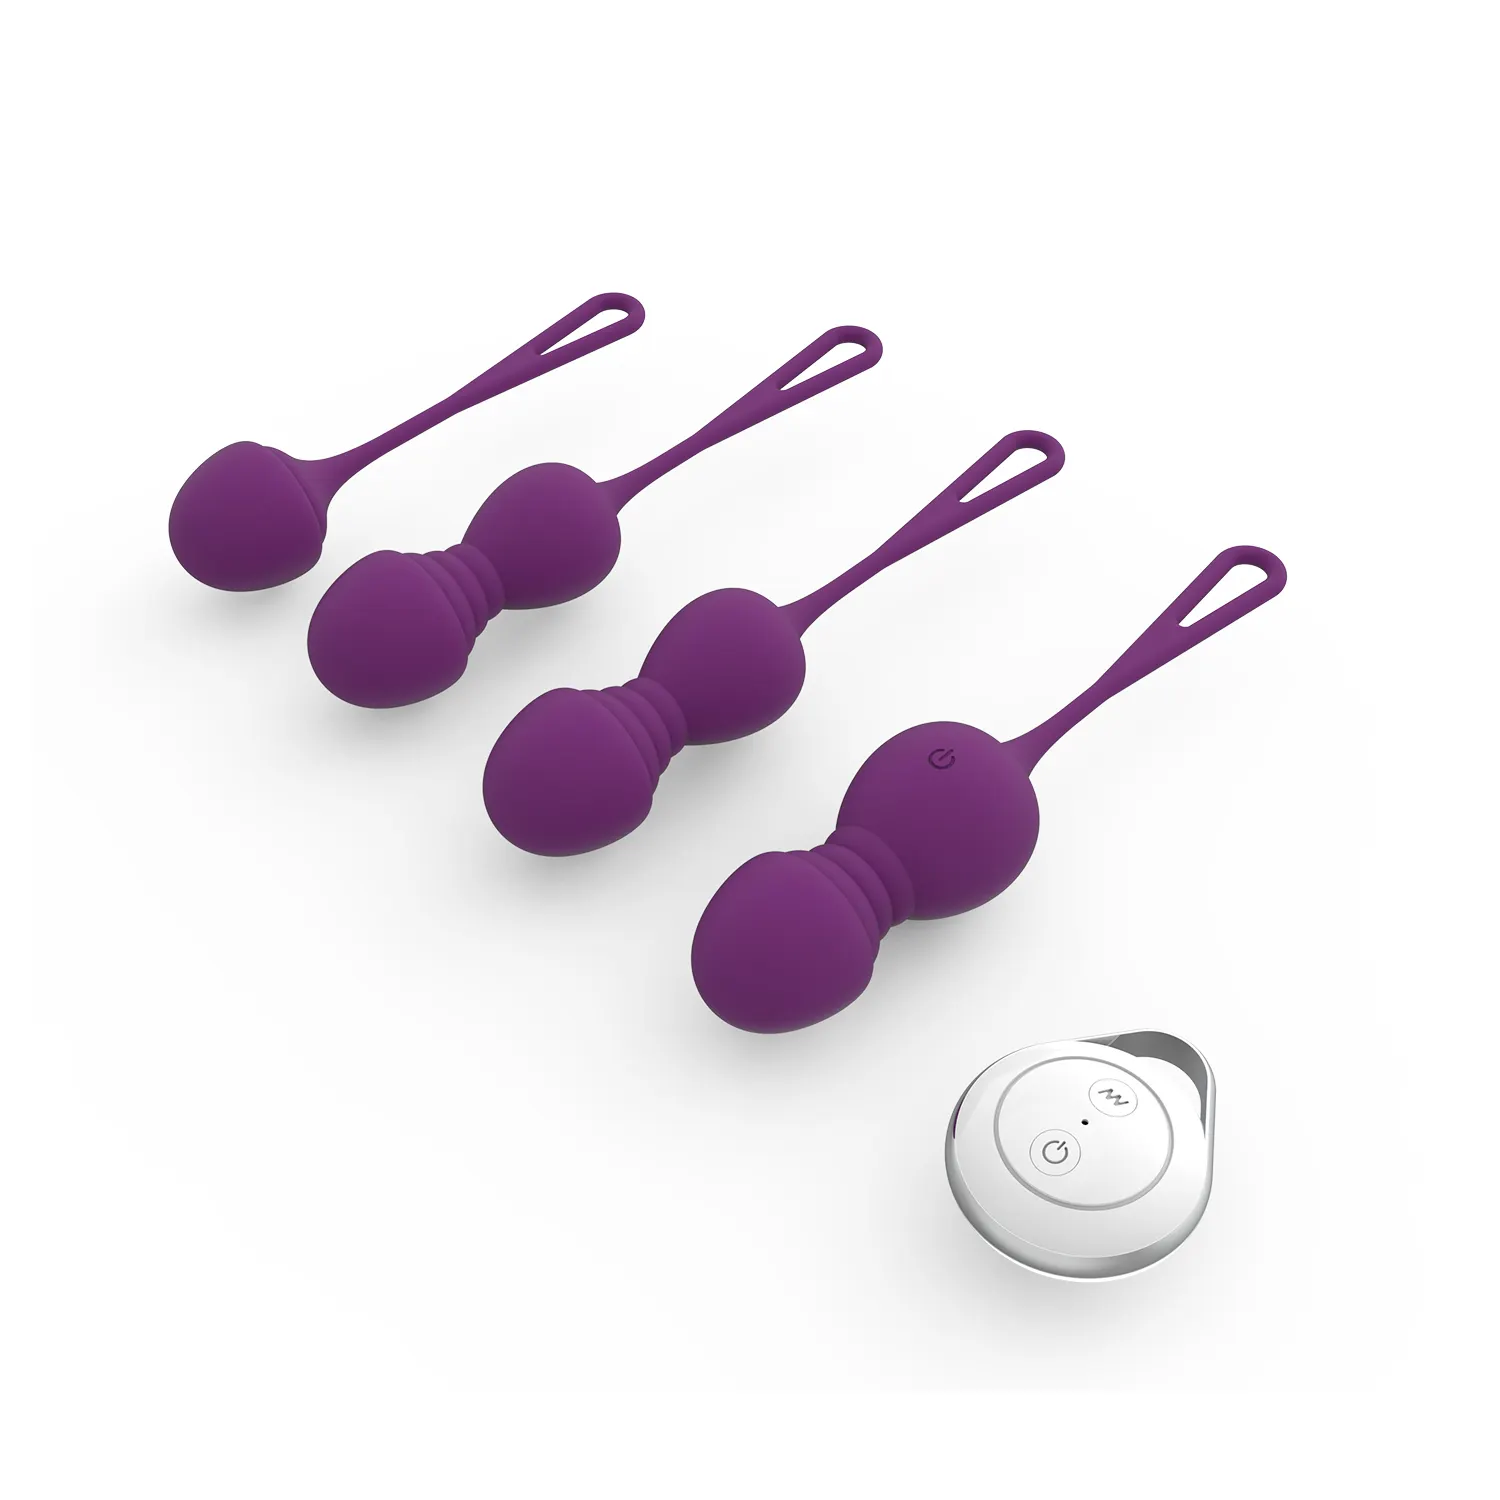 Cupidlover new Selling Kegel Balls for Beginners Women Ben Wa Balls Sets Sex Toys Wireless Remote Control Vibrating Egg